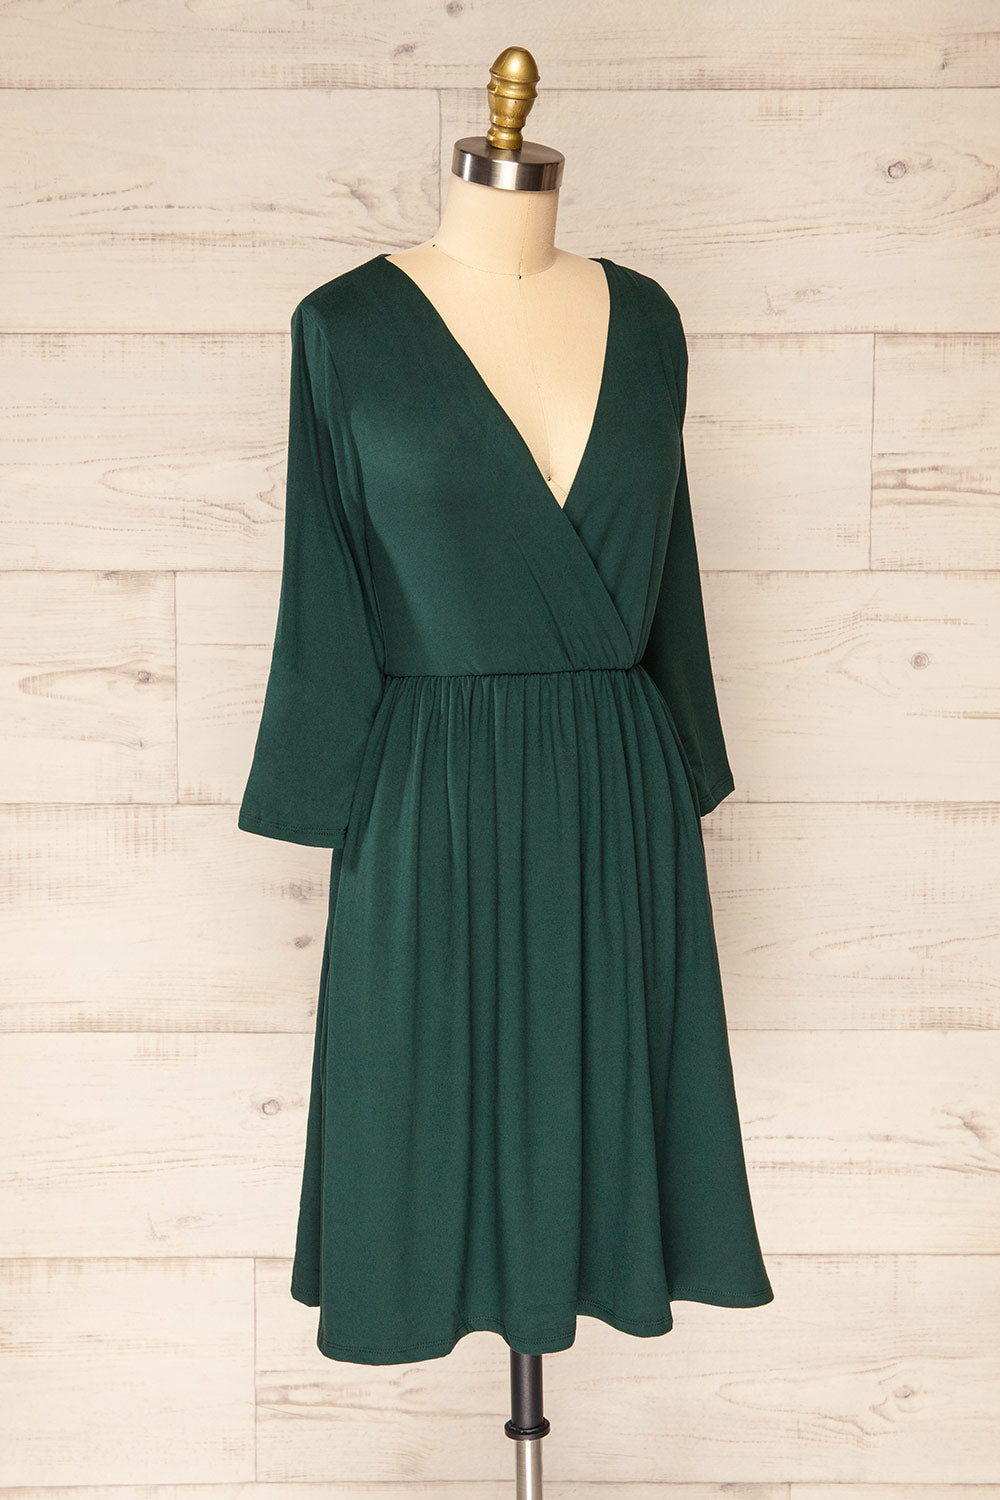 Hemili Forrest Green Wrap Neckline Short Dress | La petite garçonne side view 